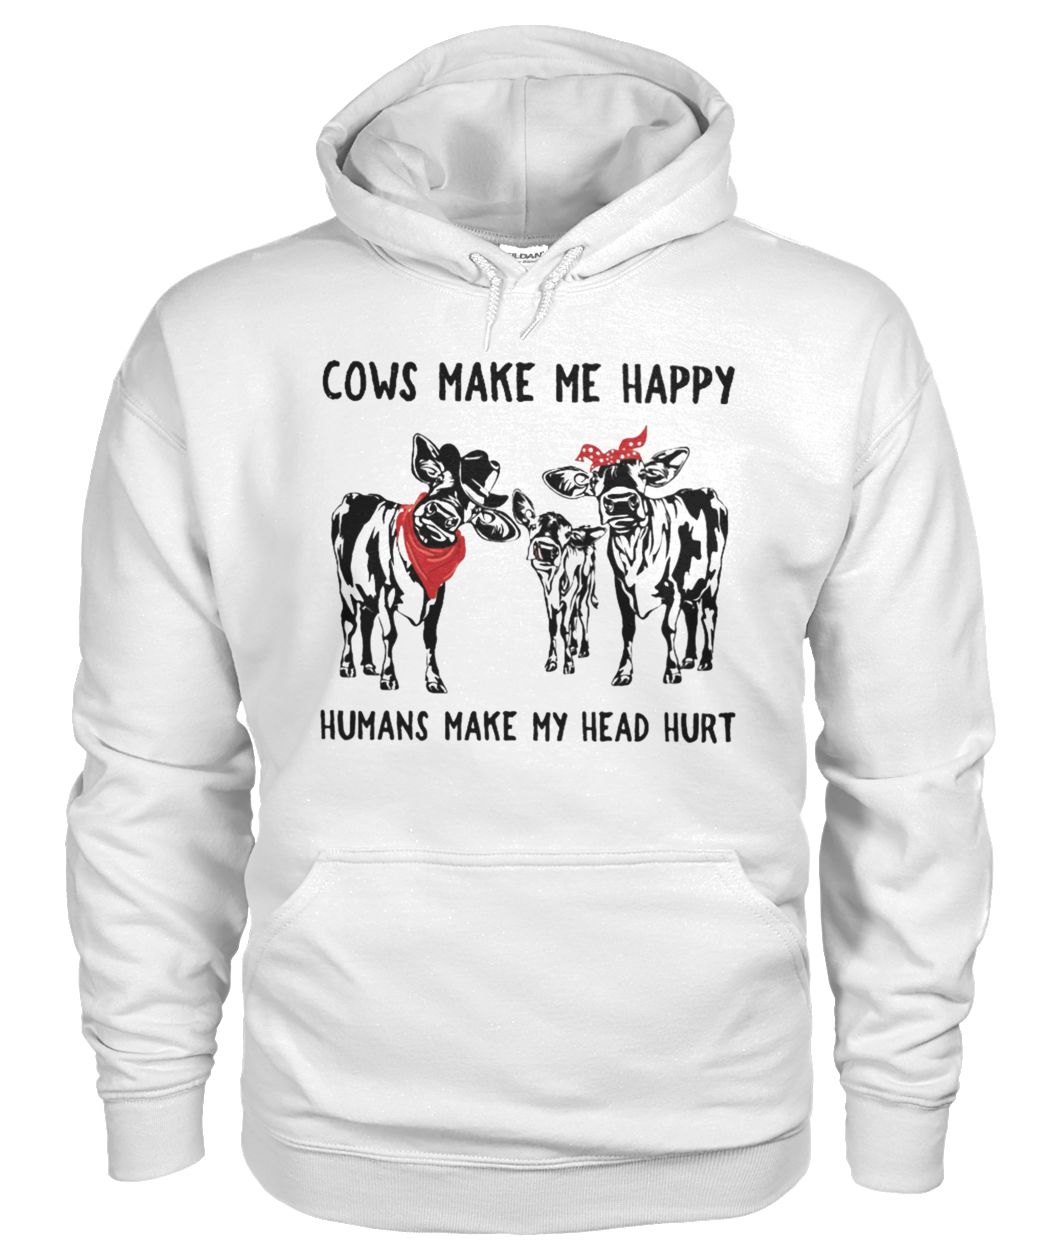 Cows make me happy humans make my head hurt gildan hoodie